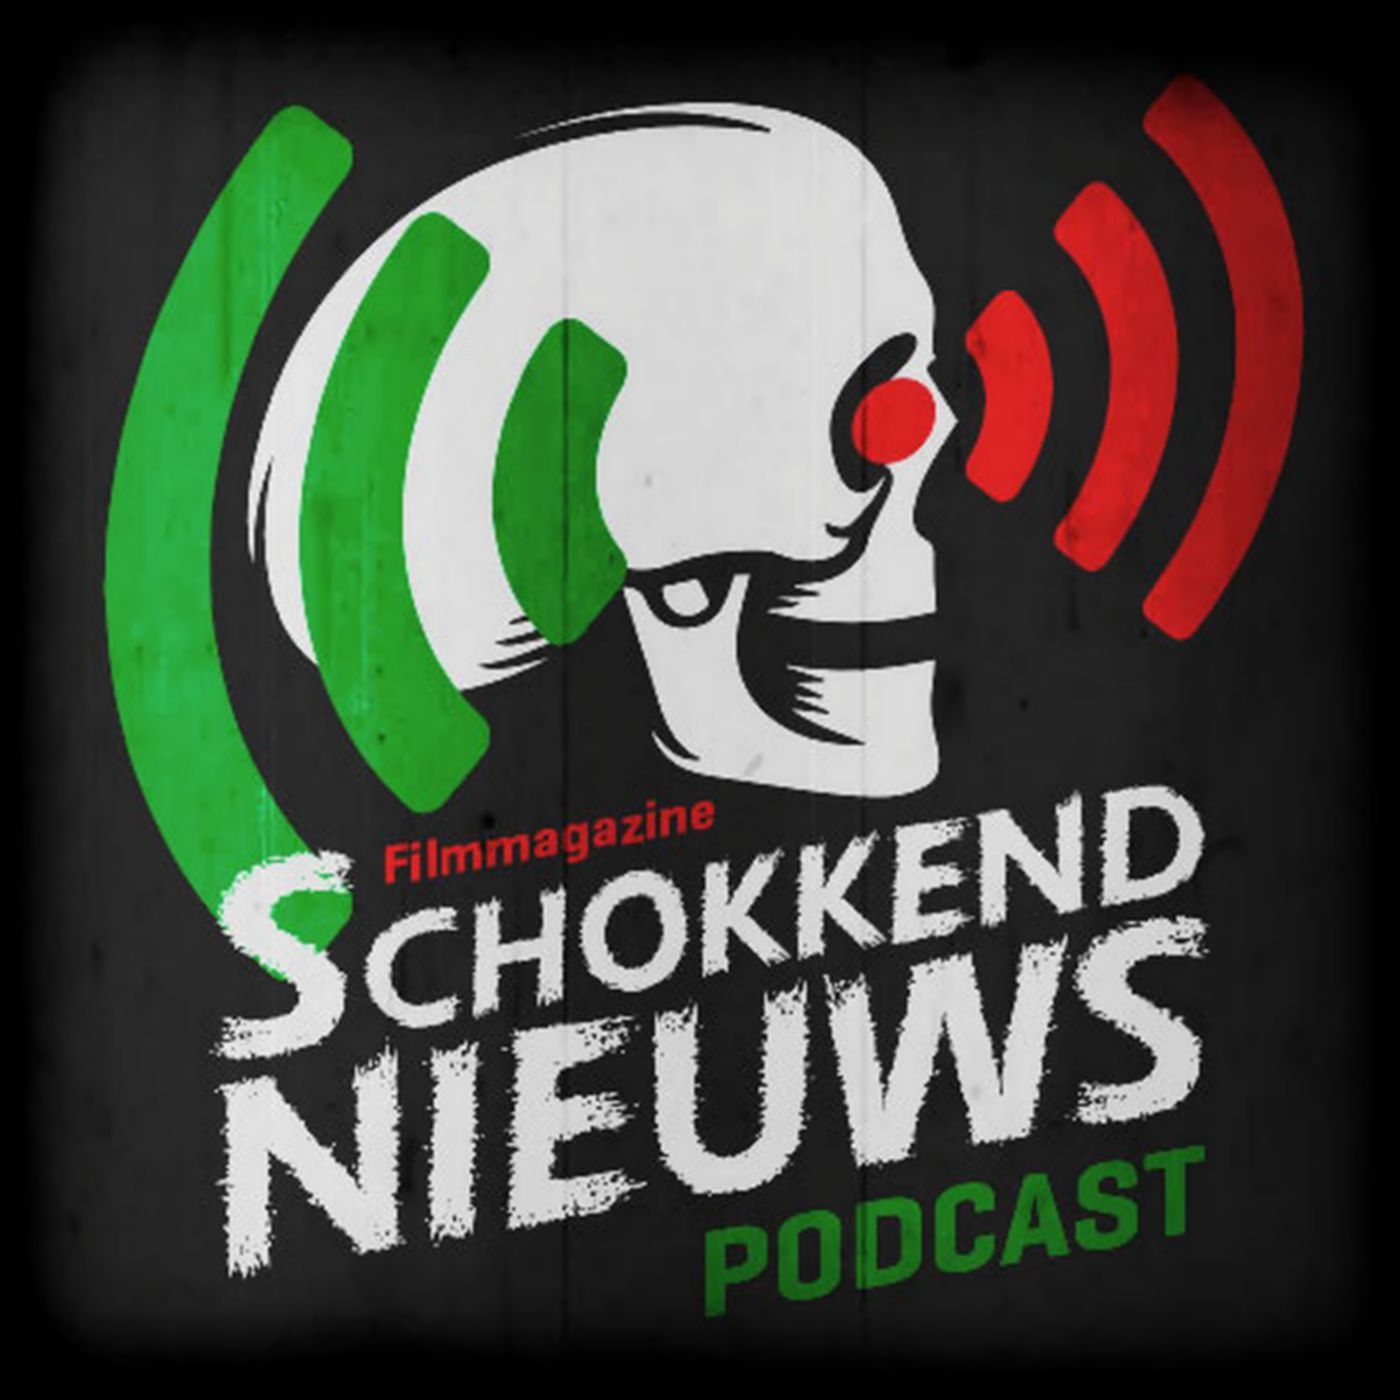 Schokkend Nieuws Podcast logo